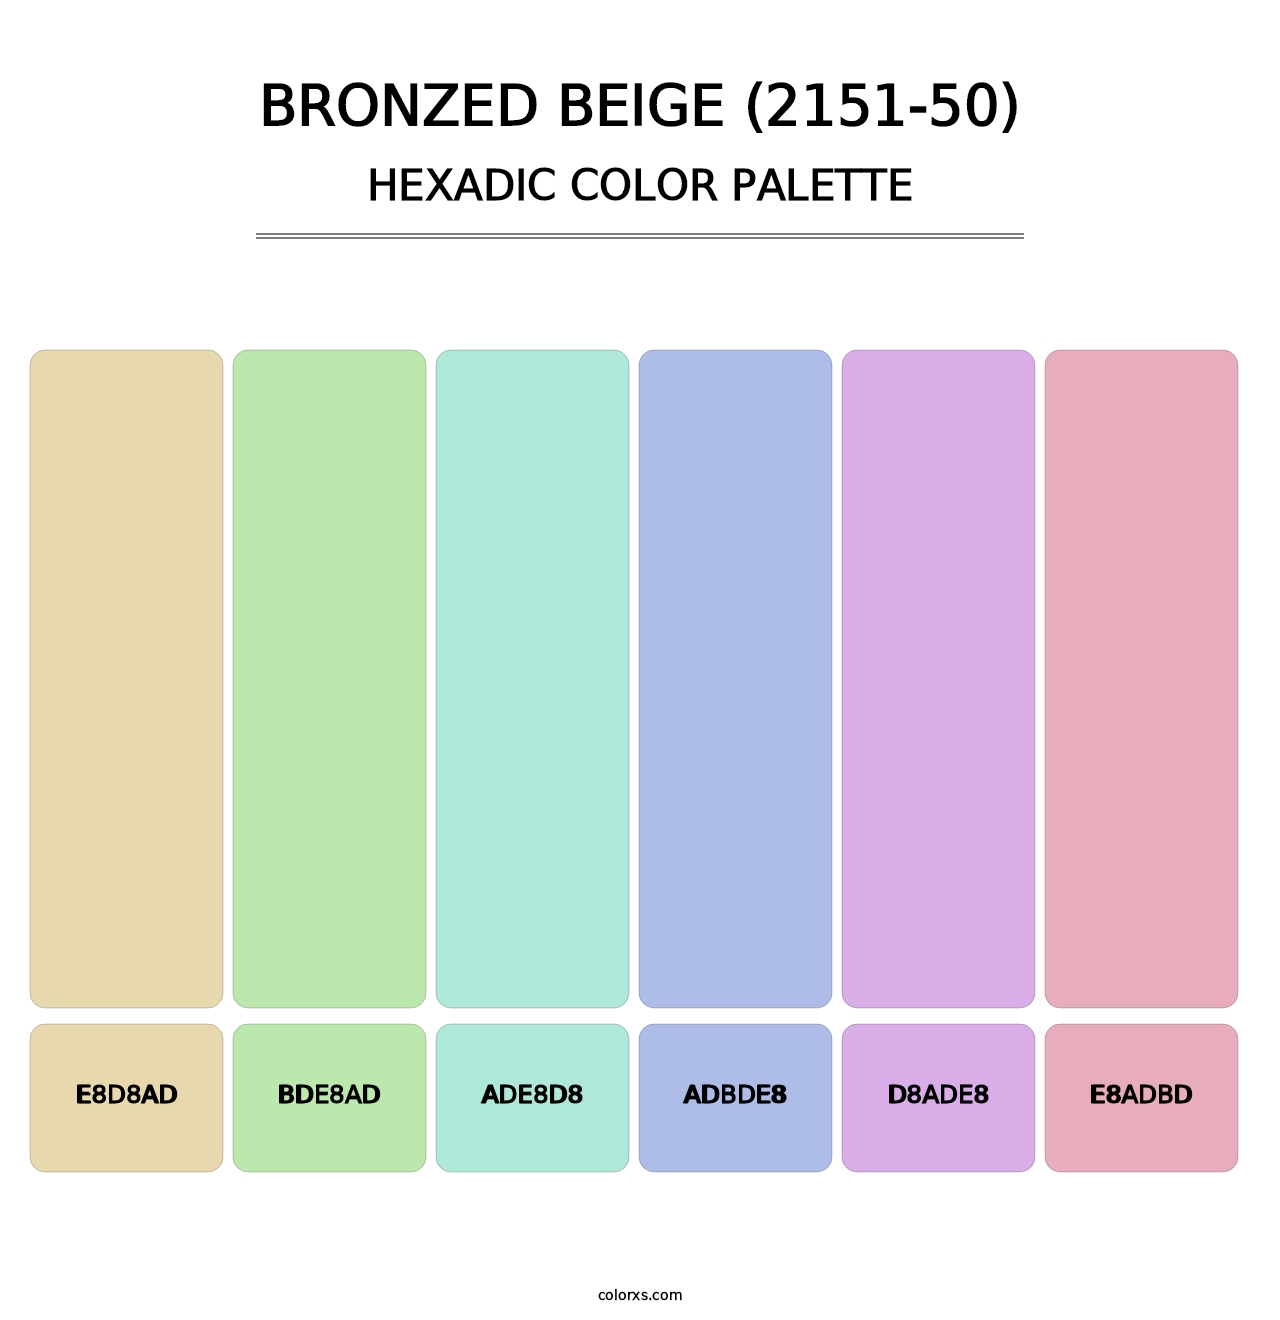 Bronzed Beige (2151-50) - Hexadic Color Palette